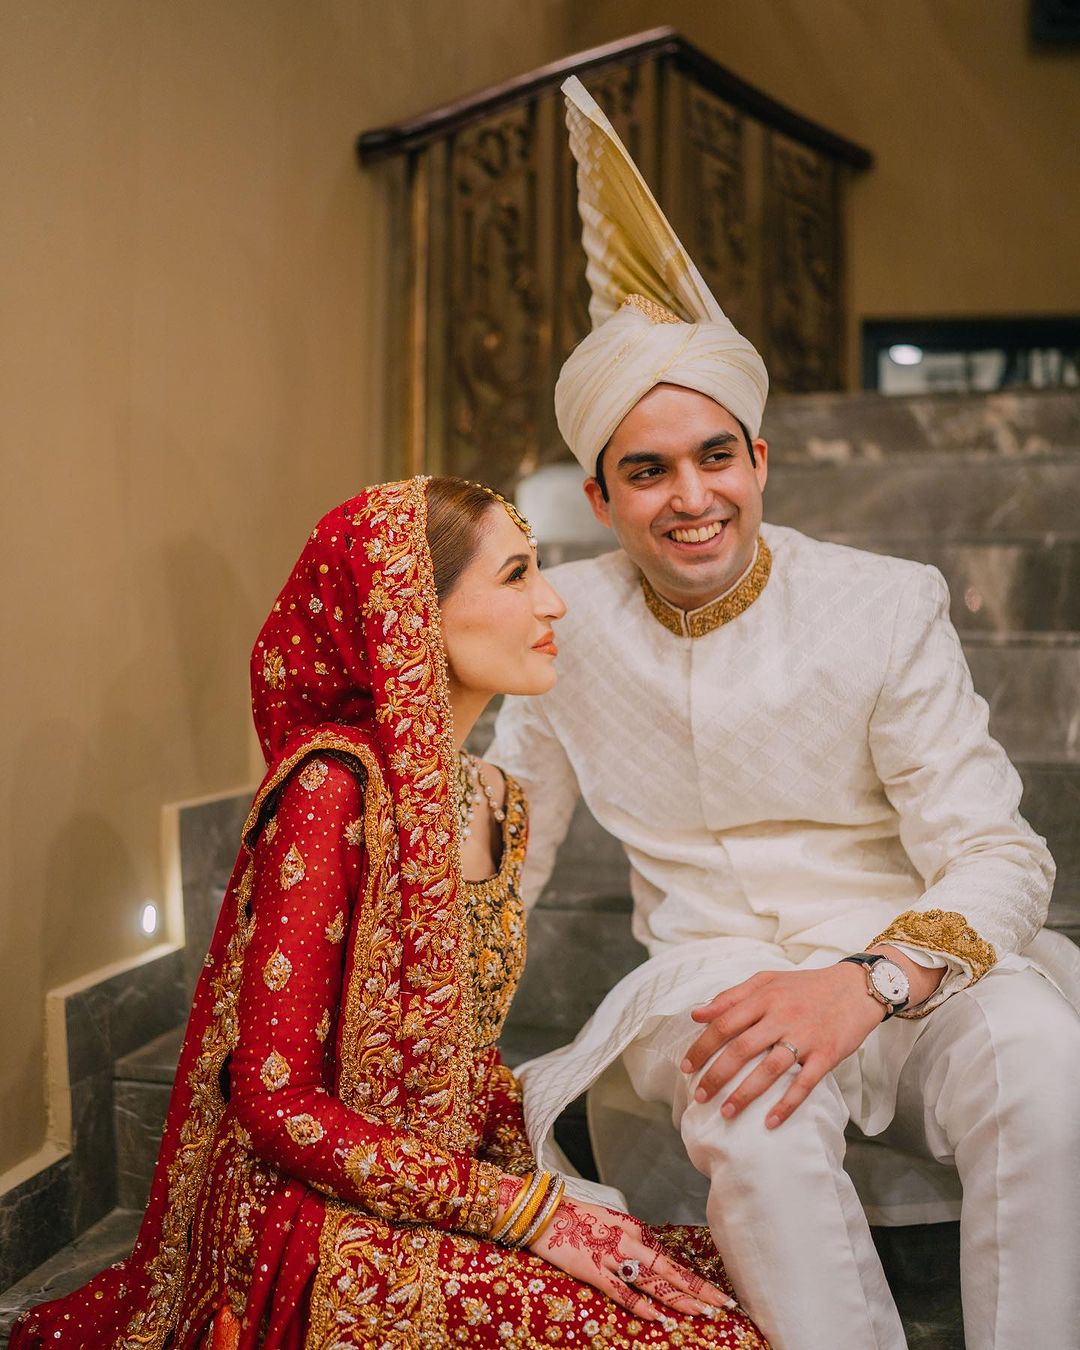 WeddingPlanningAtHome - Foliage Decor Ideas You Should Pin Right Away! |  Indian wedding outfits, Indian bridal outfits, Indian bridal dress